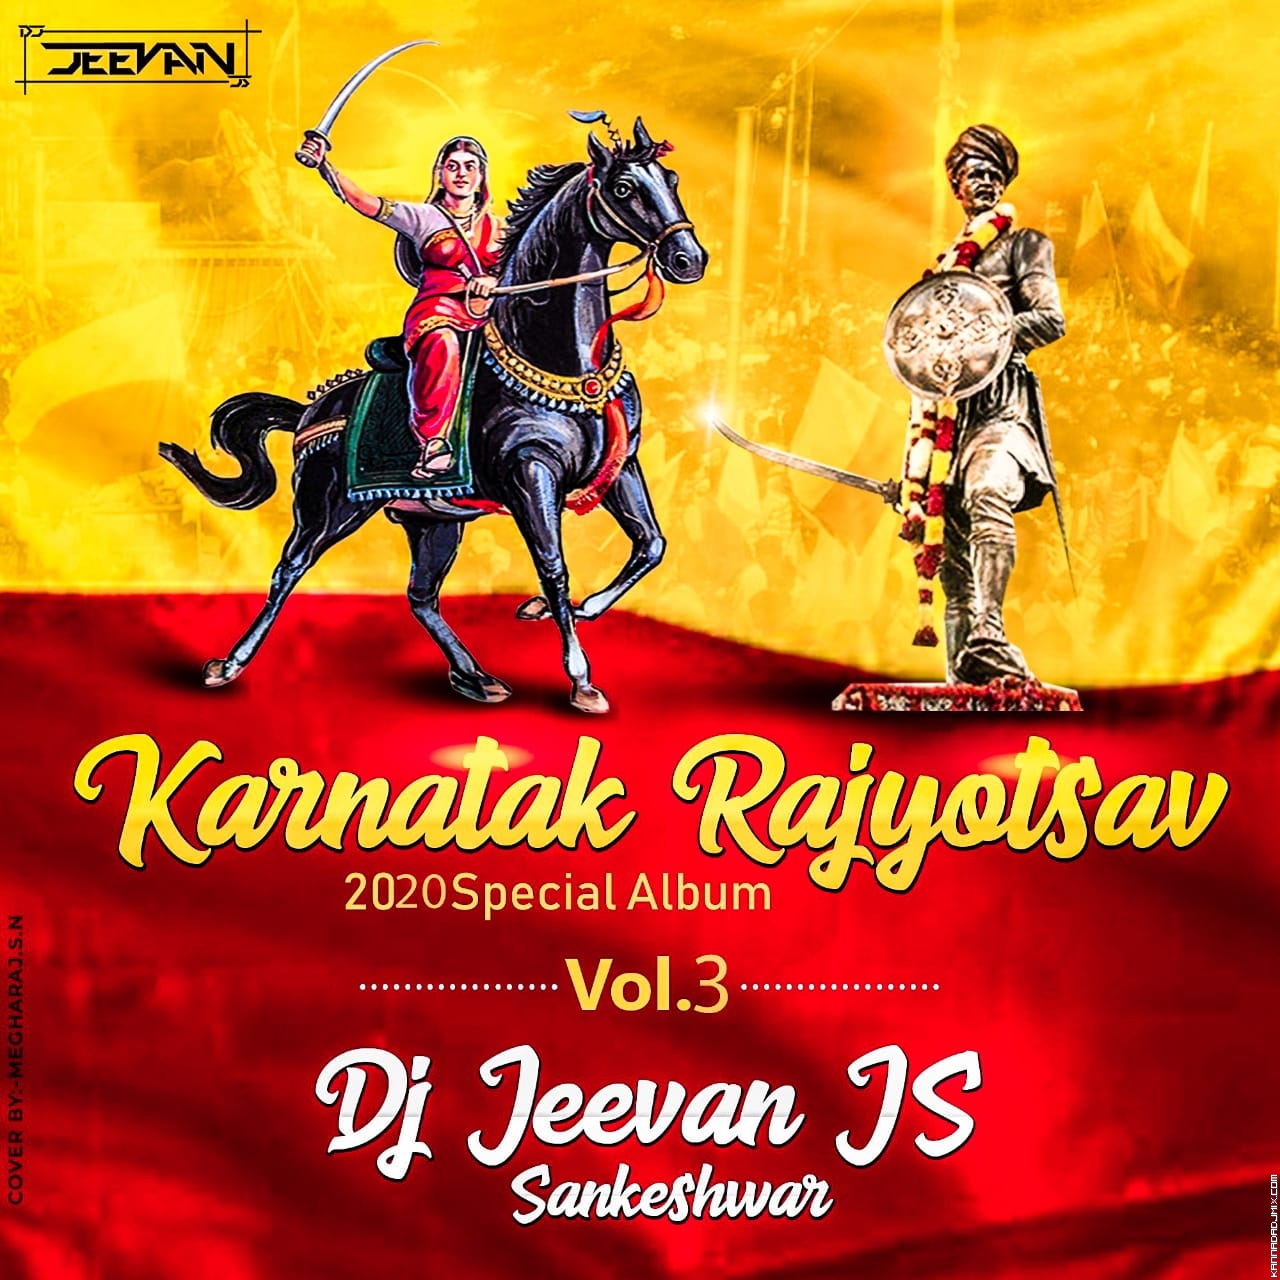 kittur Rani Channamage Jai Theme prat 2 2020 Mix by dj jeevan js sankeshwar.mp3